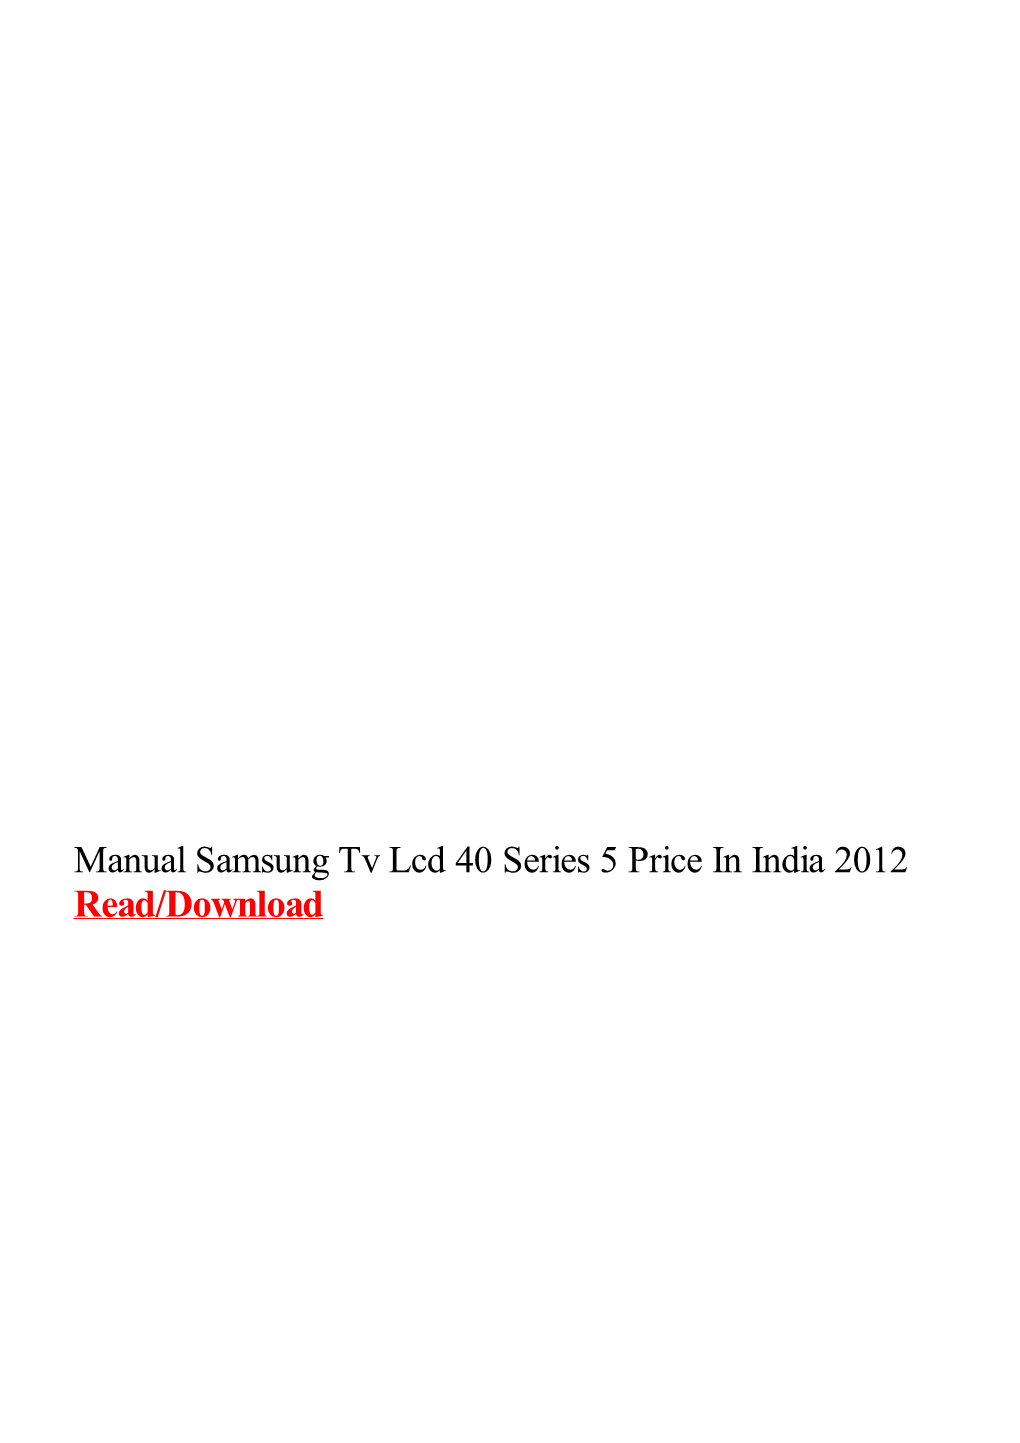 Manual Samsung Tv Lcd 40 Series 5 Price in India 2012